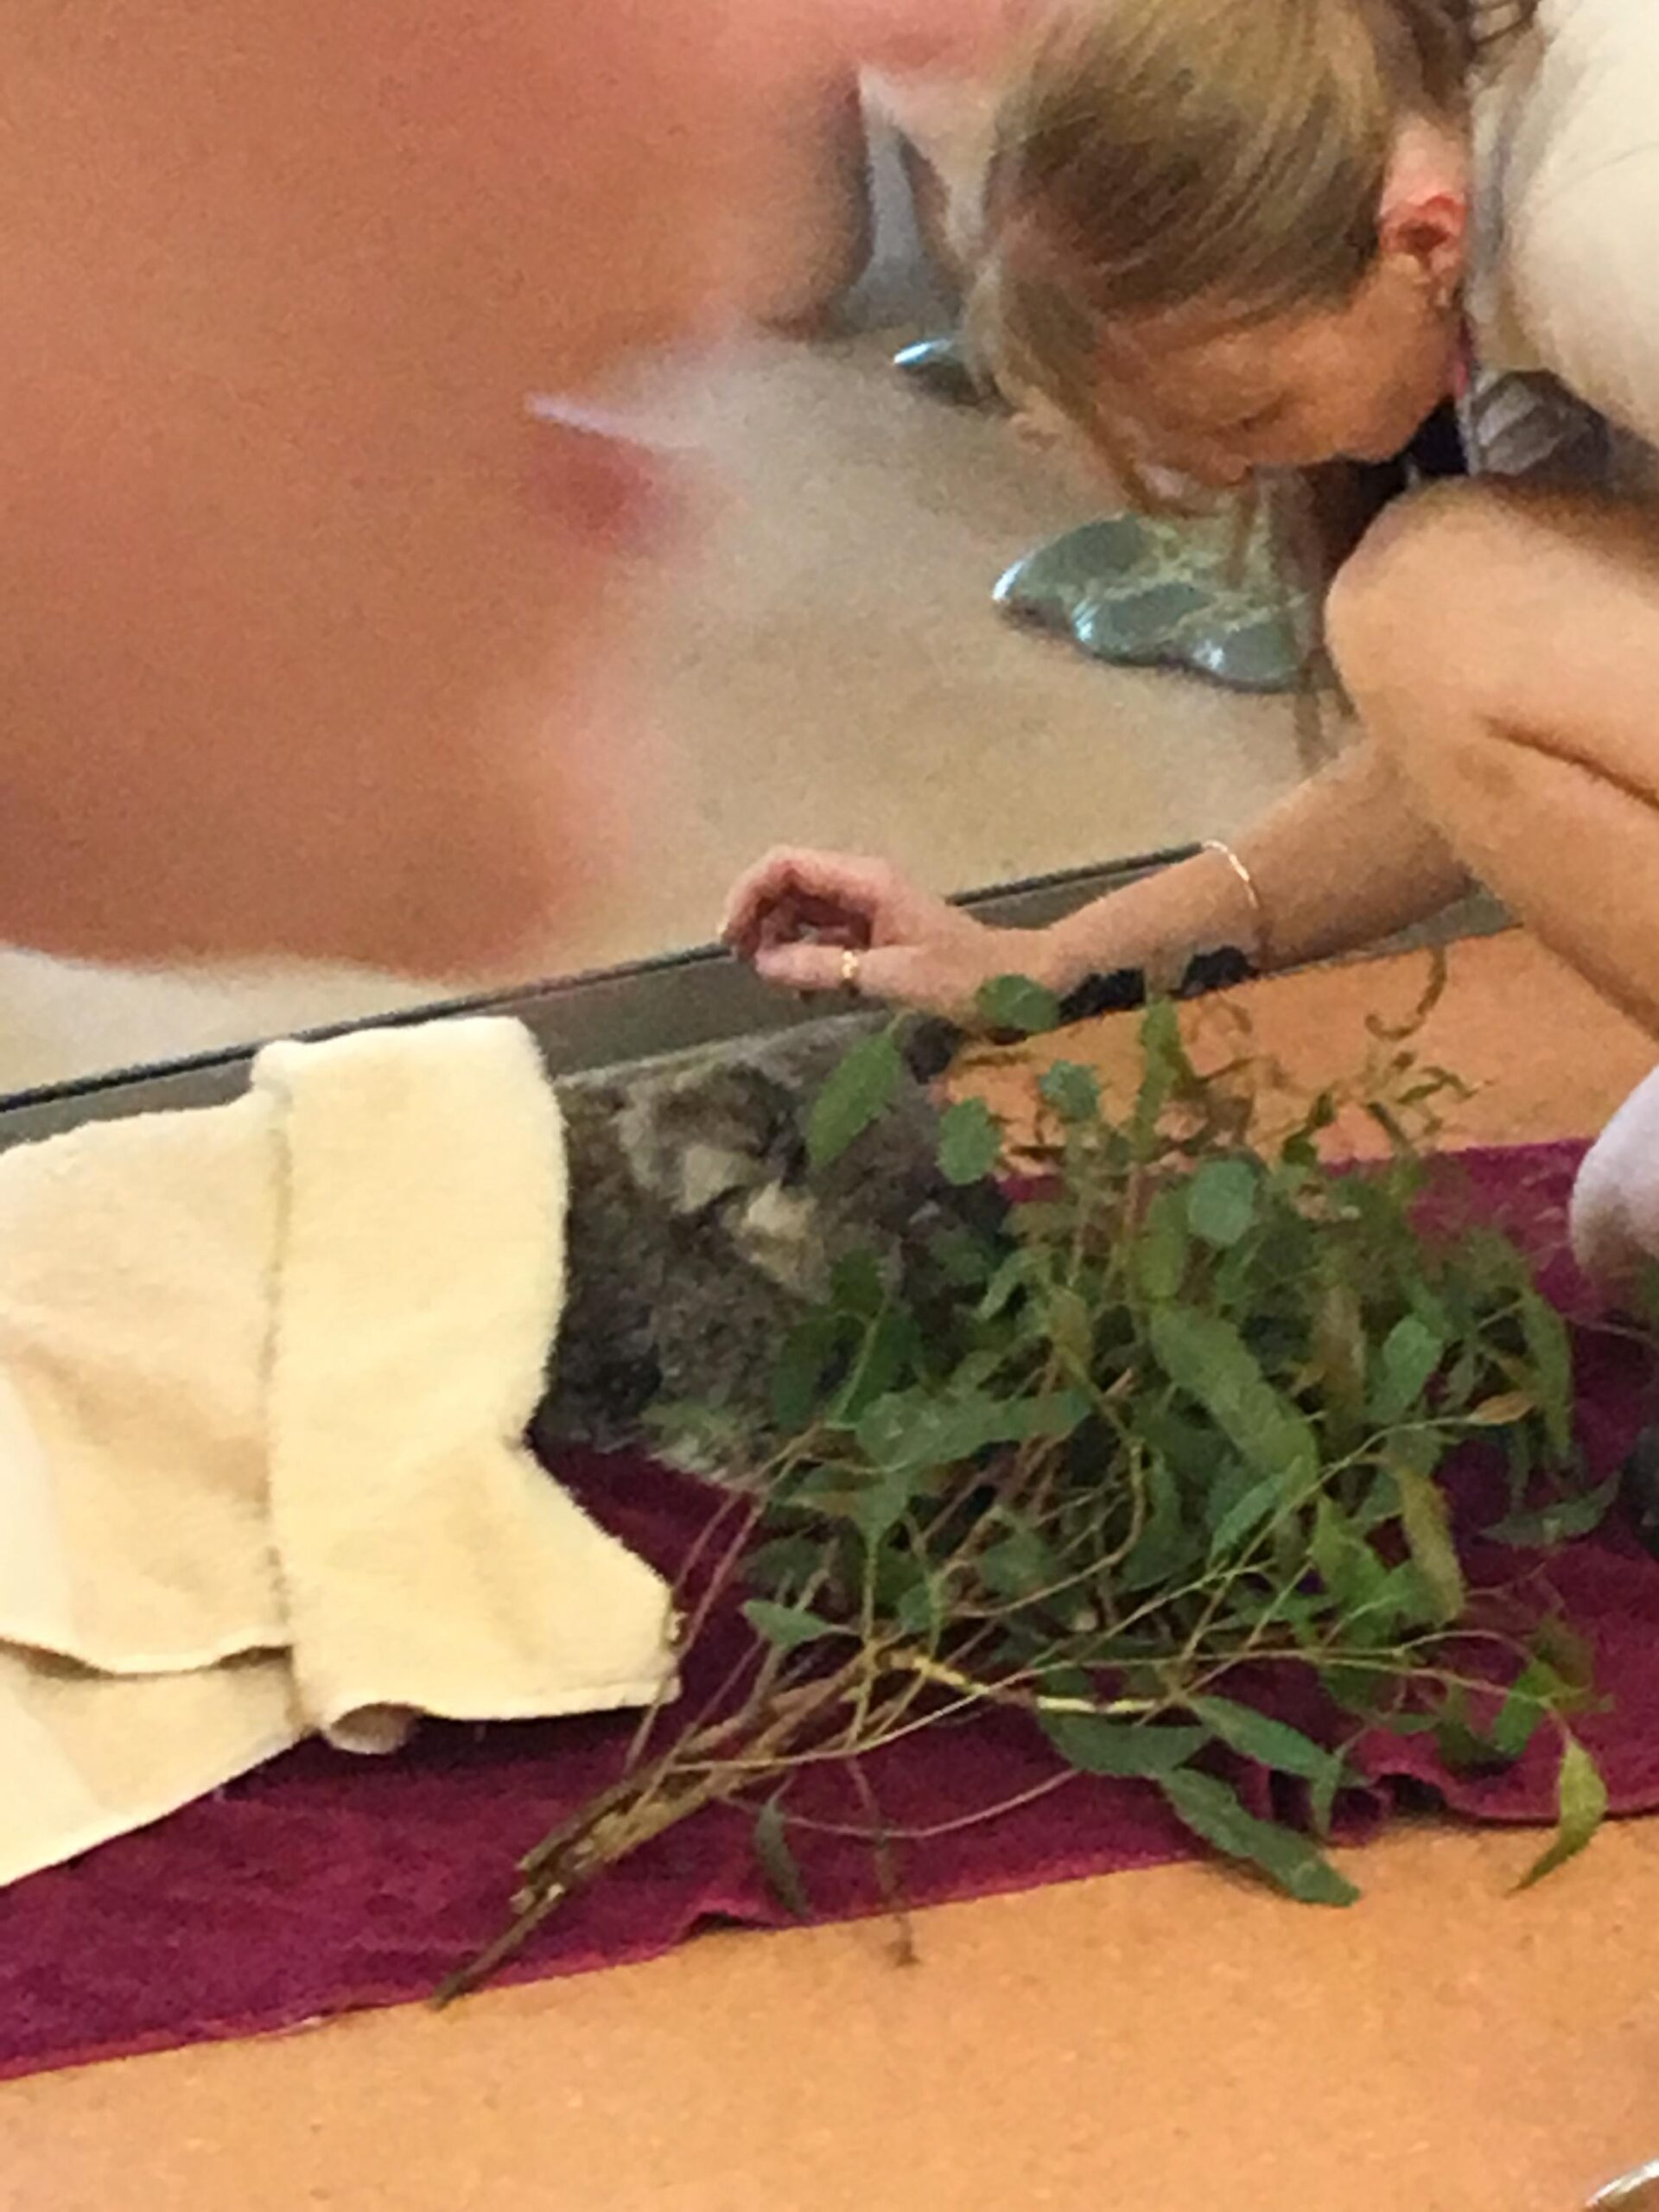 Treating sick Koala at Steve Irwin's Animal Hospital - Photo by Allen Rieland